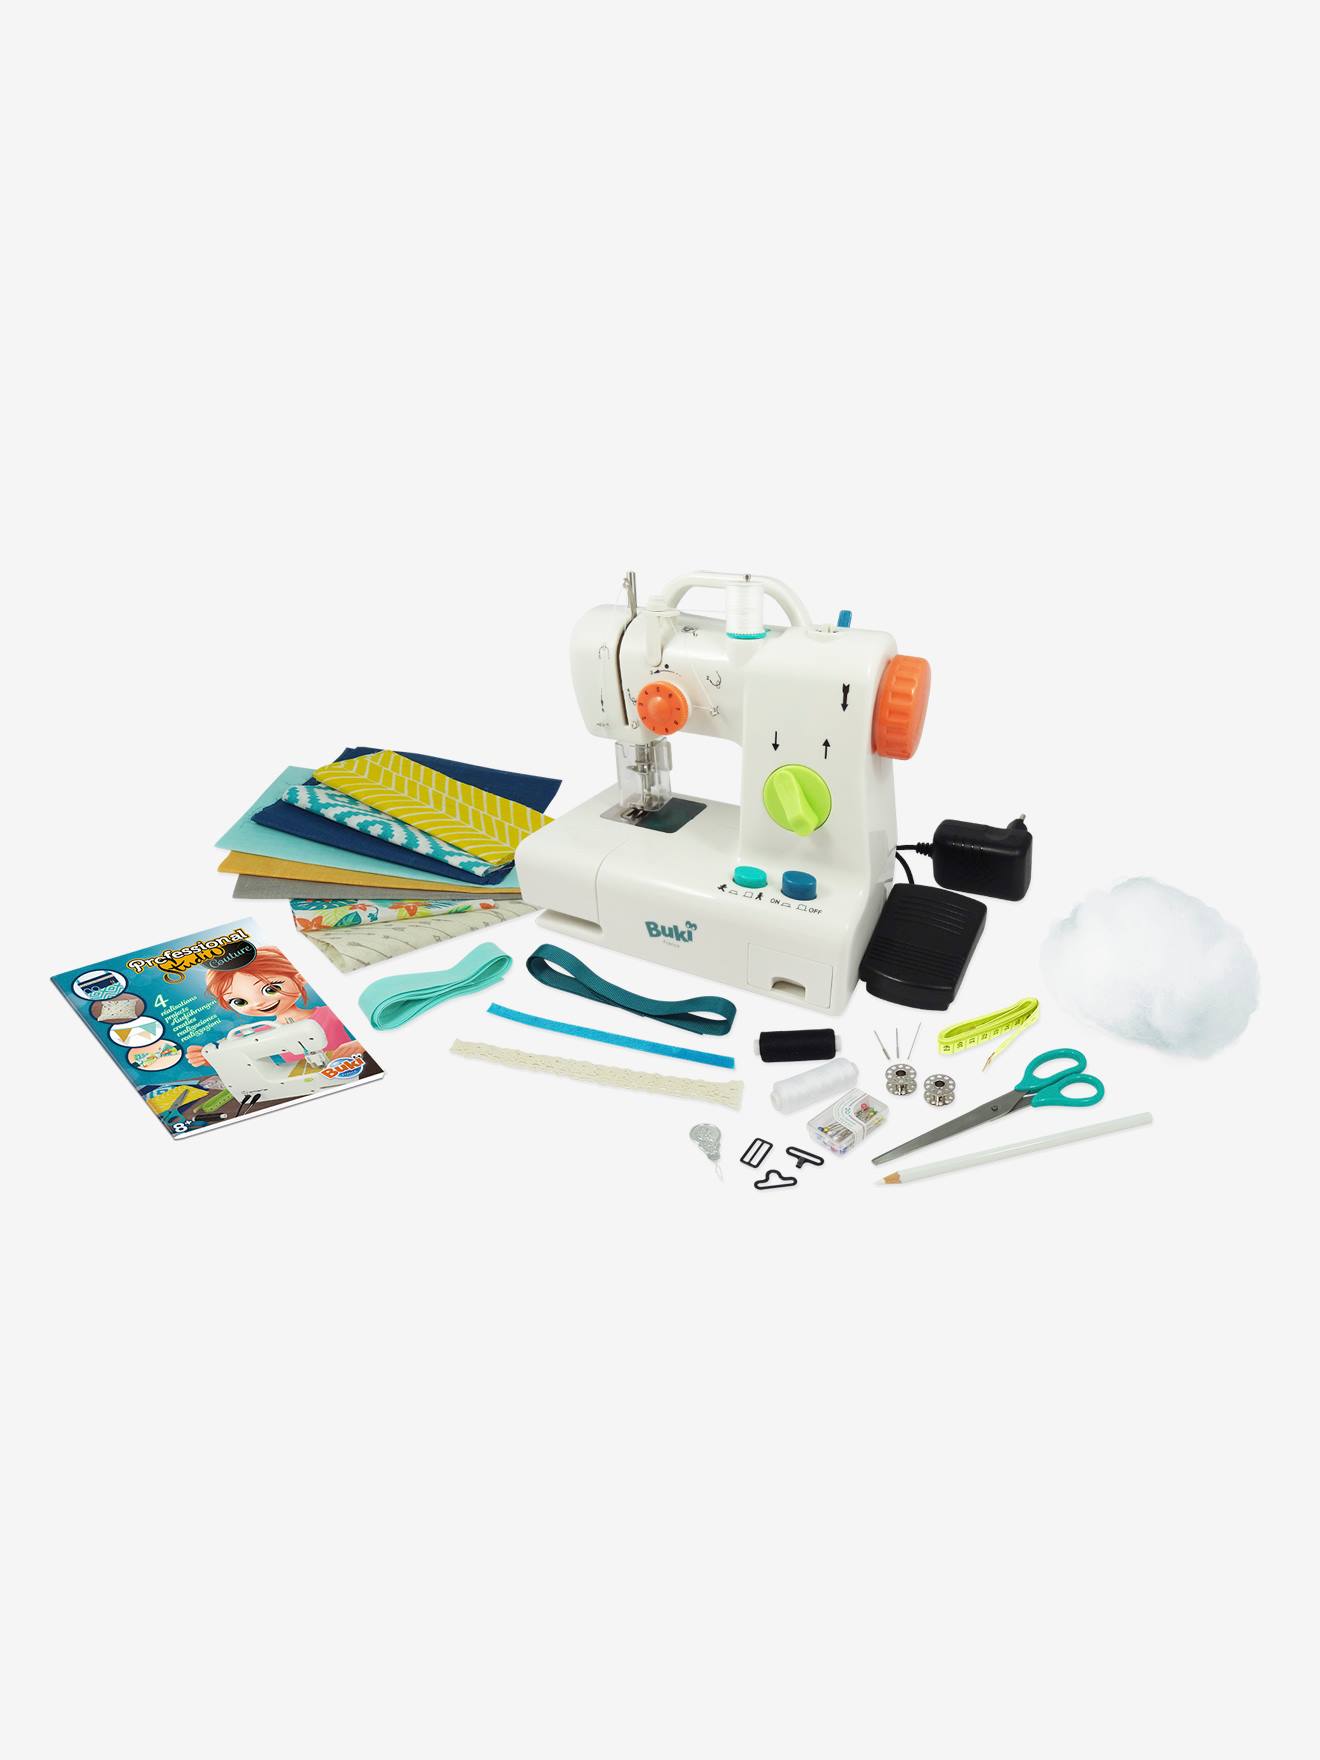 Professional Studio Sewing Machine, by BUKI white